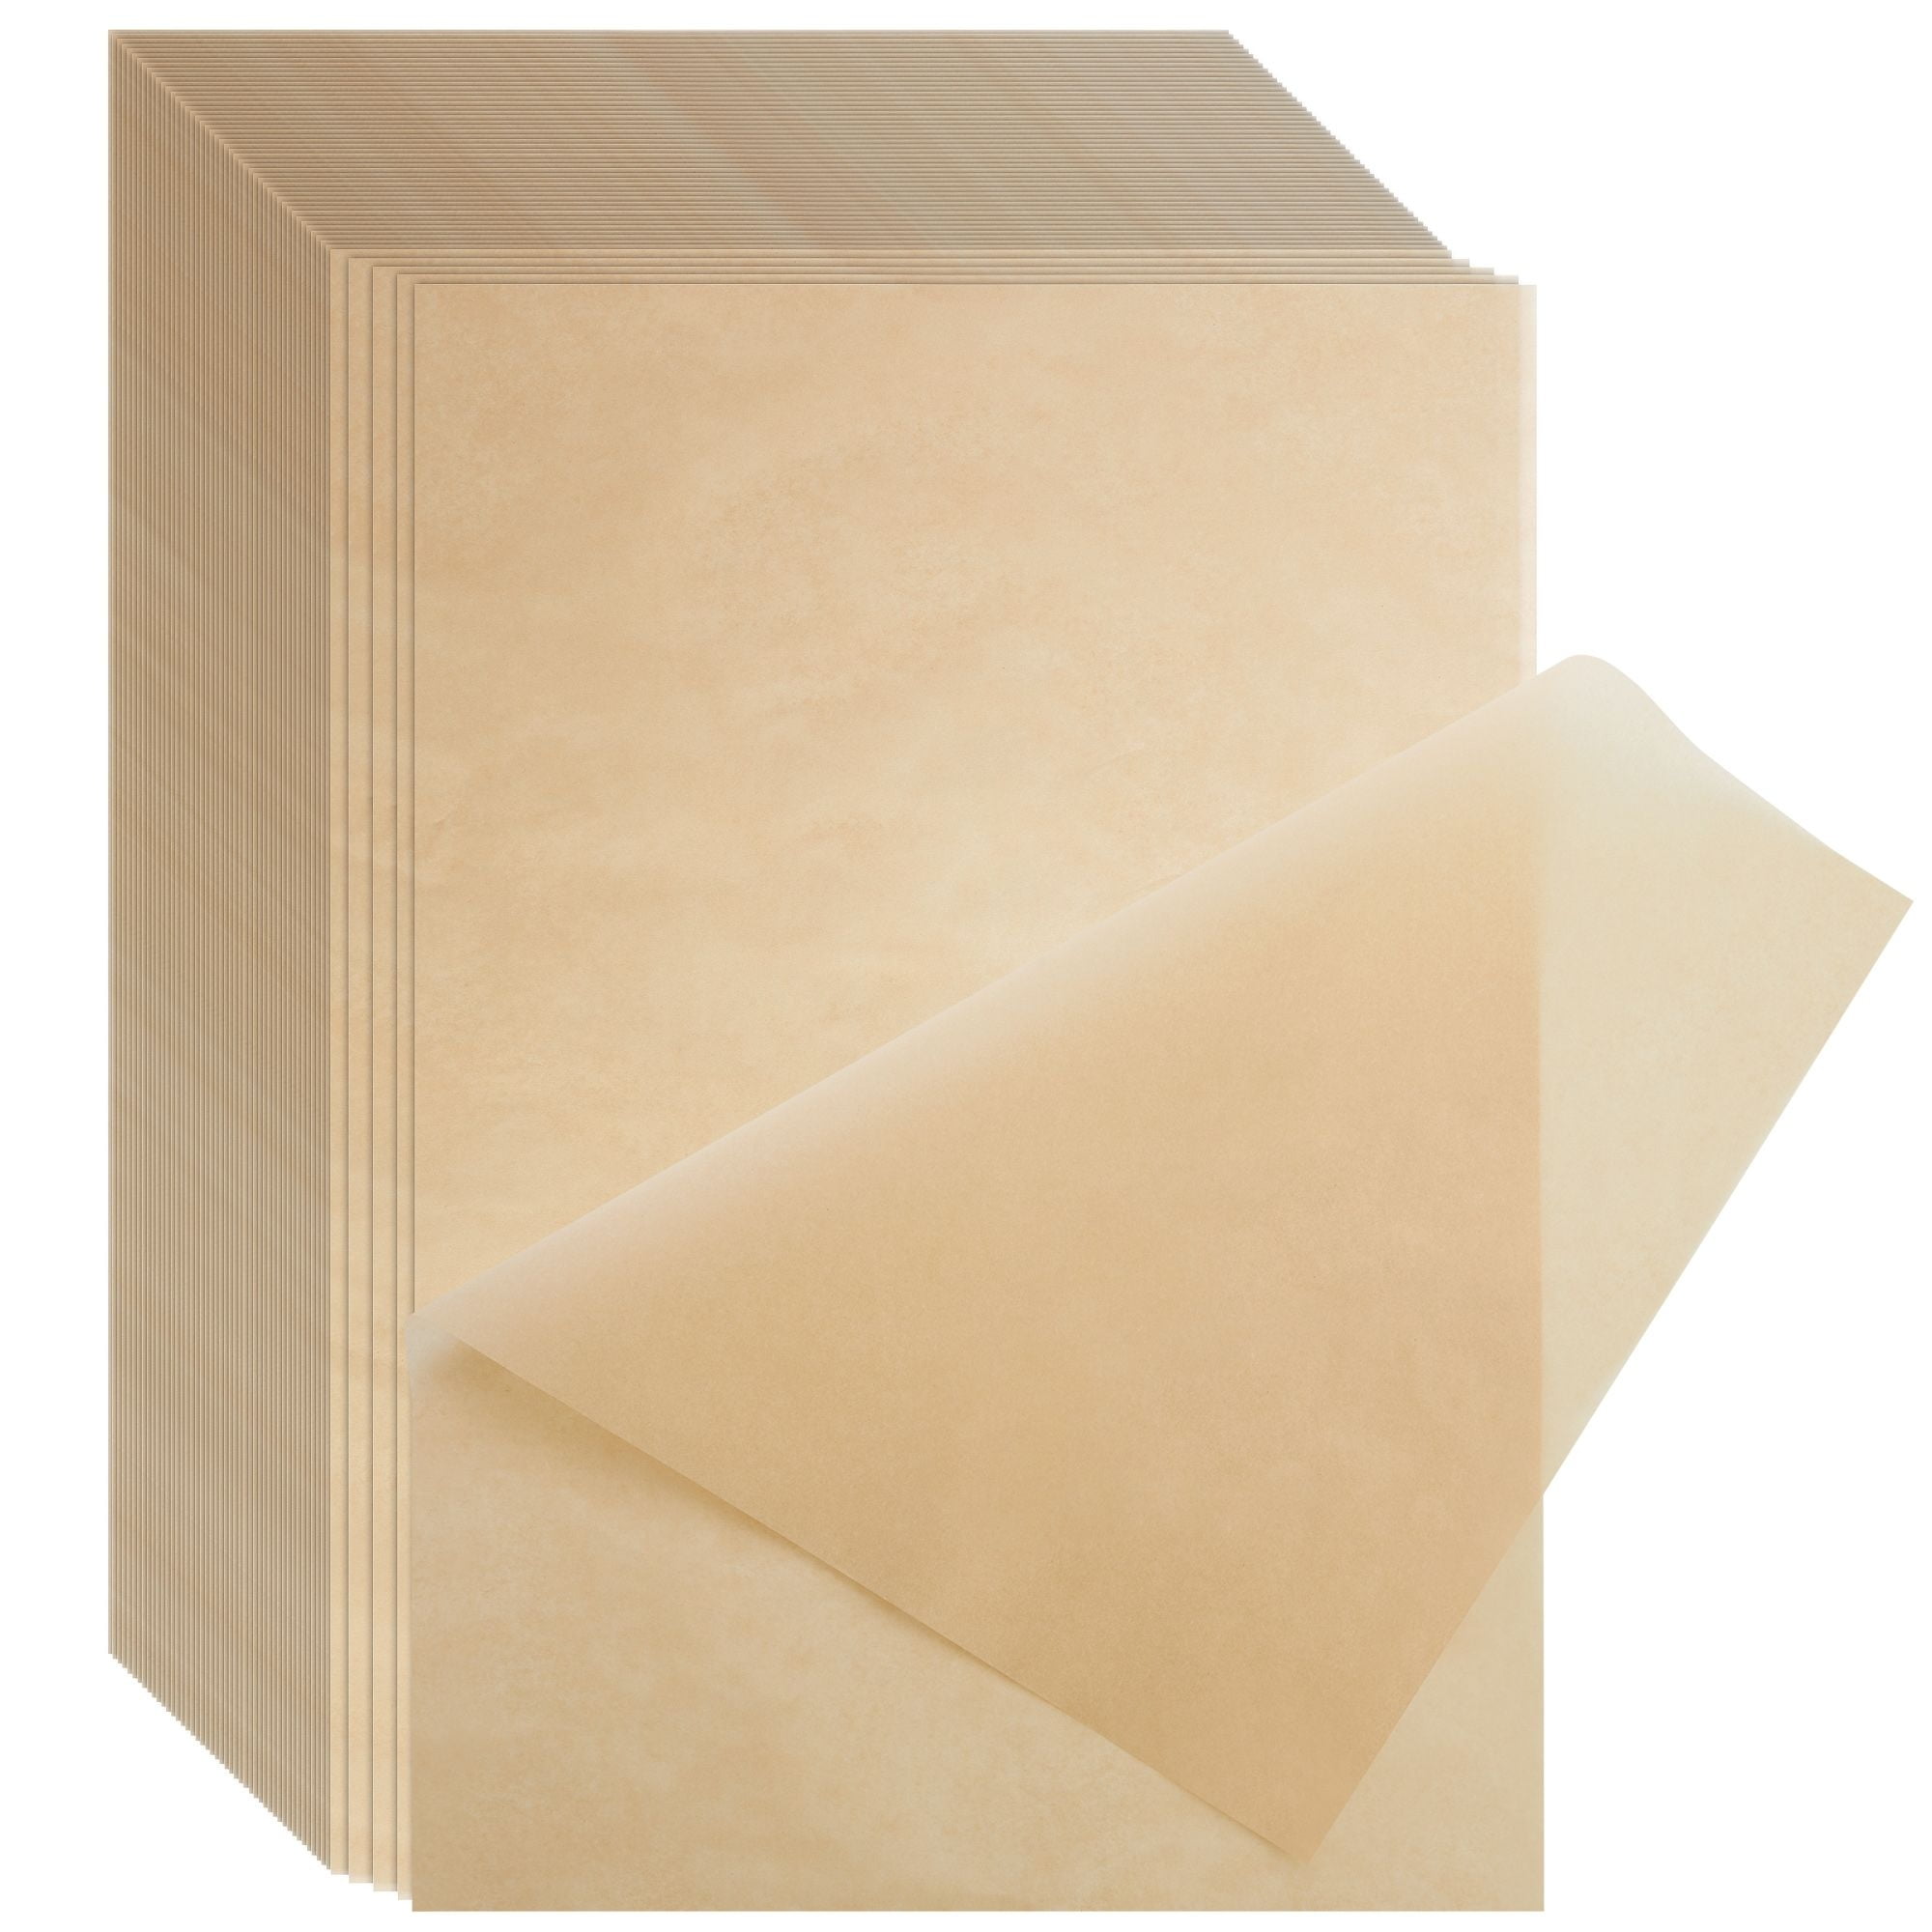  SMARTAKE 400PCS Parchment Paper Sheets, 12 x 16 IN Pre